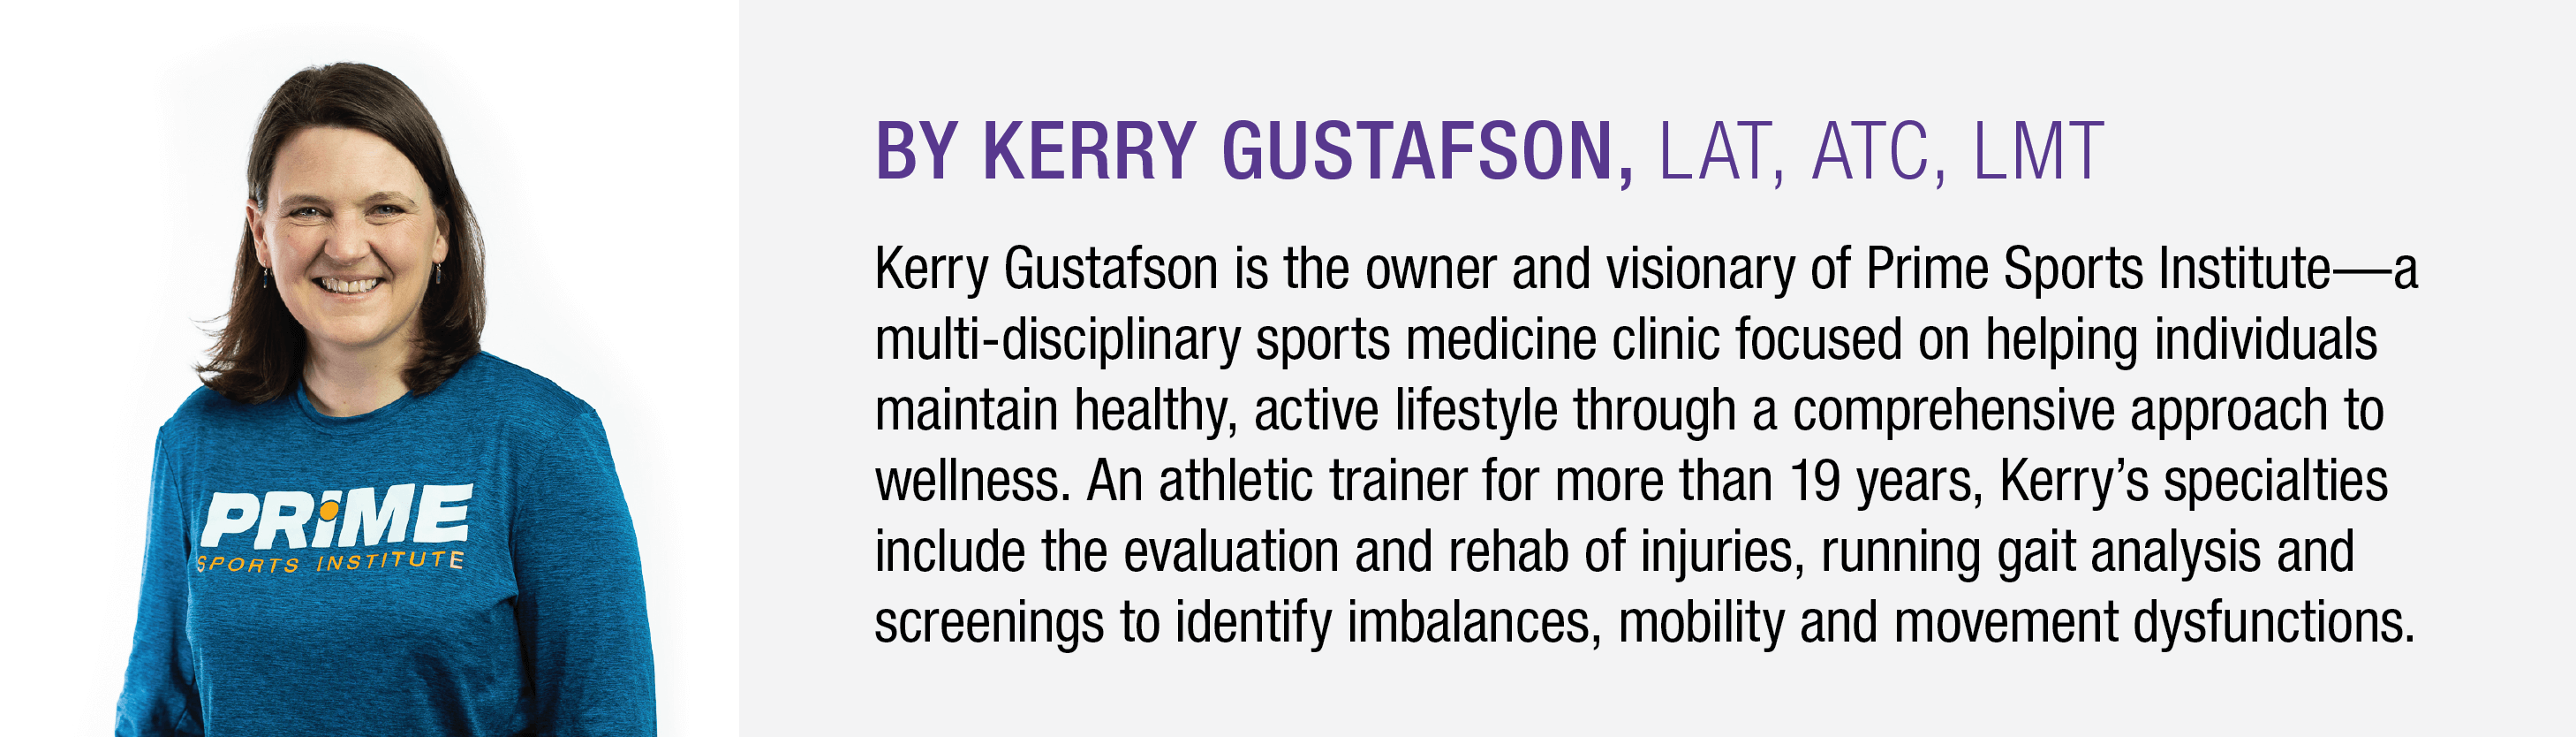 Kerry Gustafson Bio